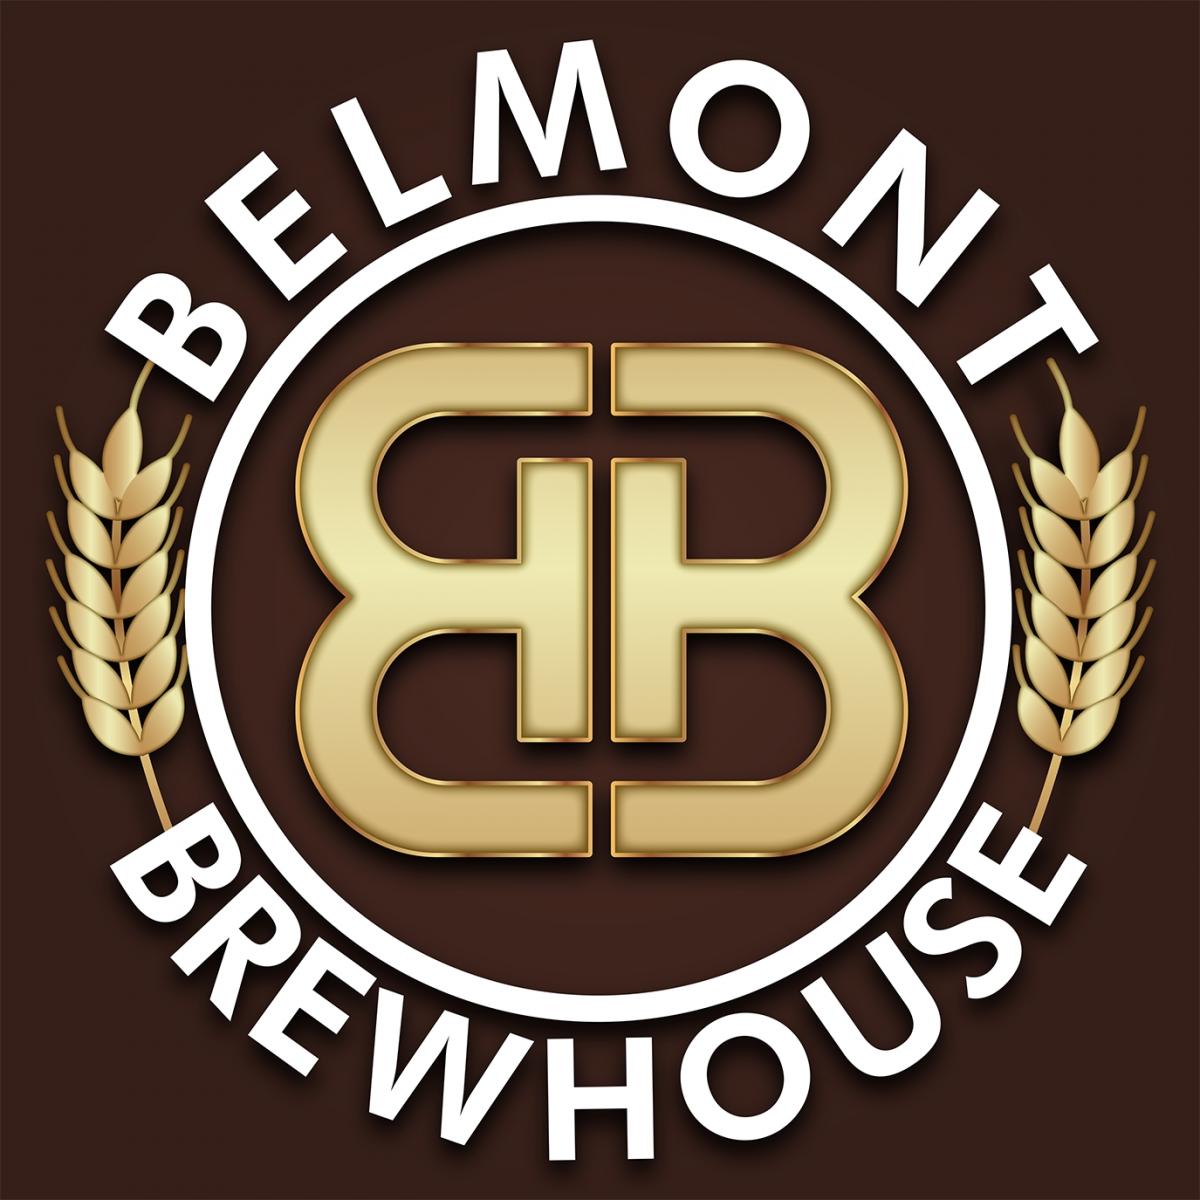 Belmont Brewhouse logo